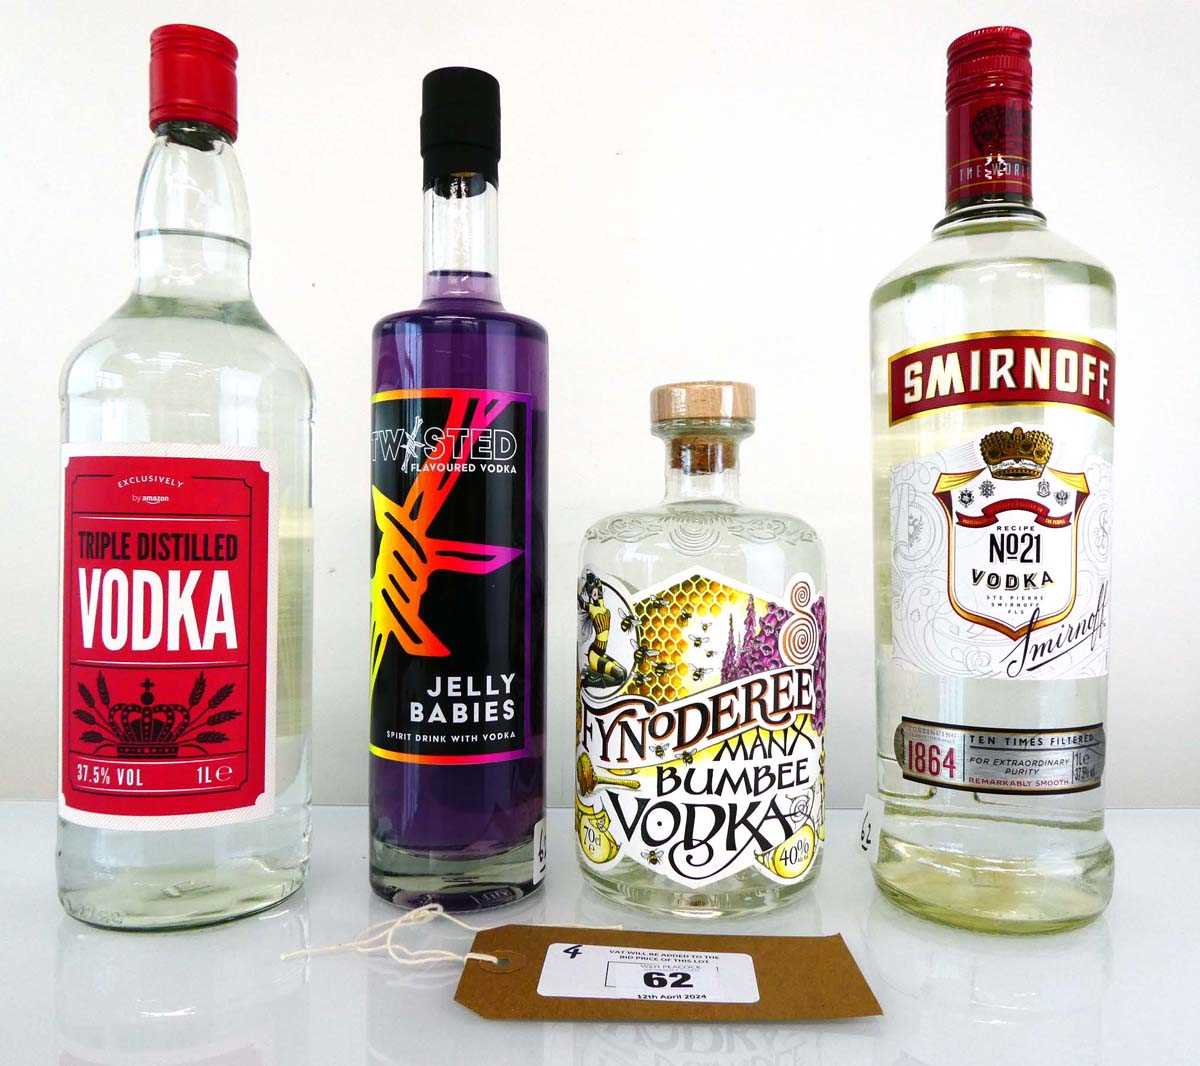 +VAT 4 bottles of Vodka, 1x Fynoderee Manx Bumble Vodka 40% 70cl, 1x Twisted Jelly Babies